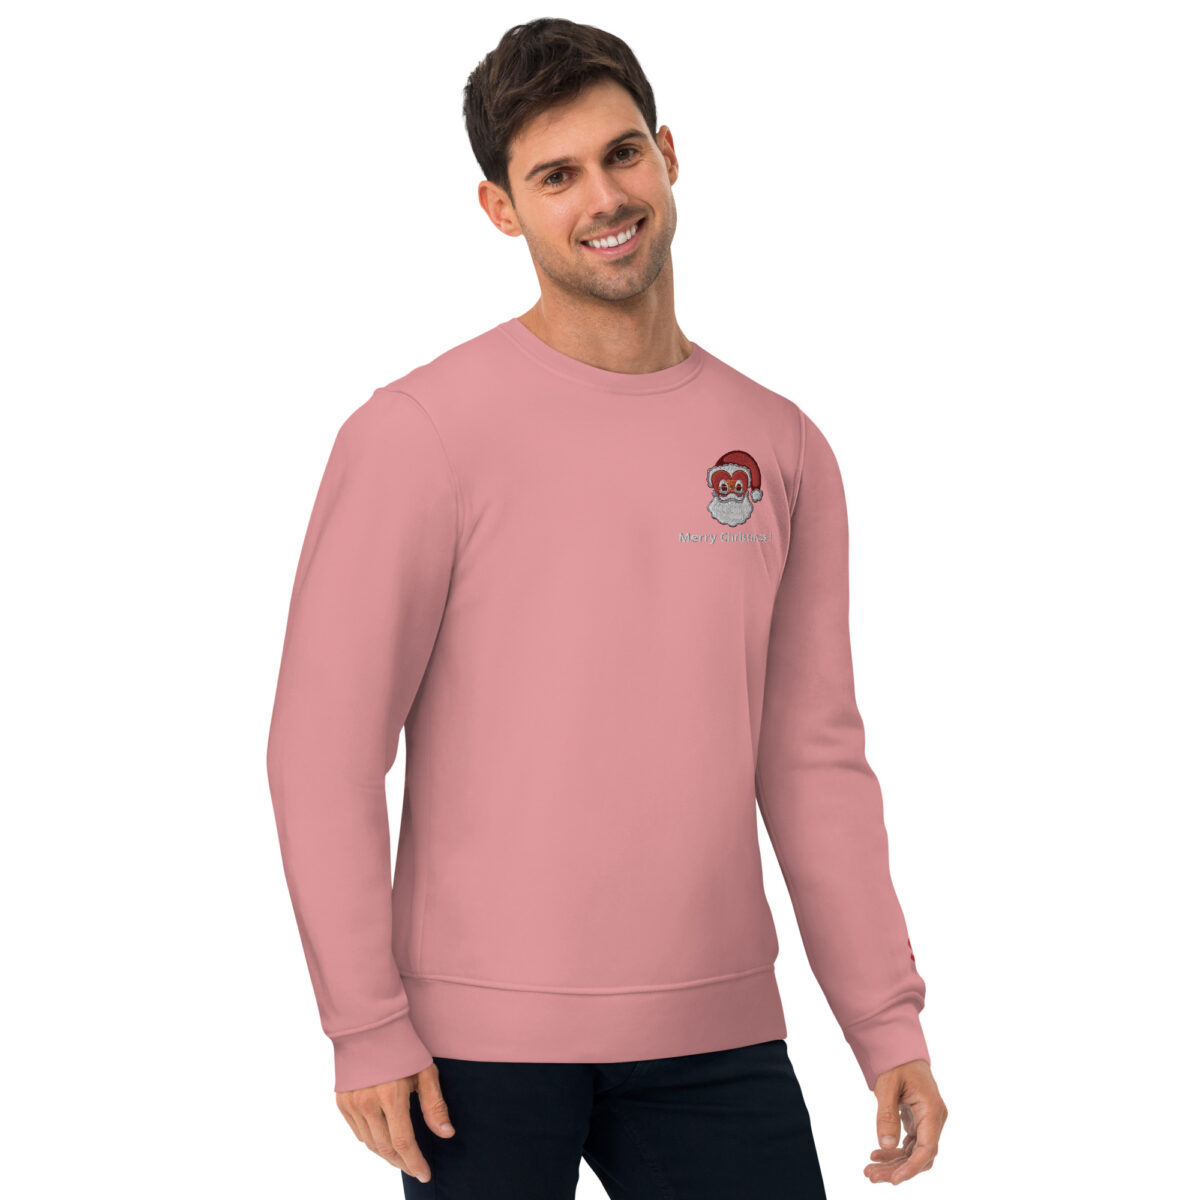 unisex-eco-sweatshirt-canyon-pink-front-653bb73c81ec5.jpg